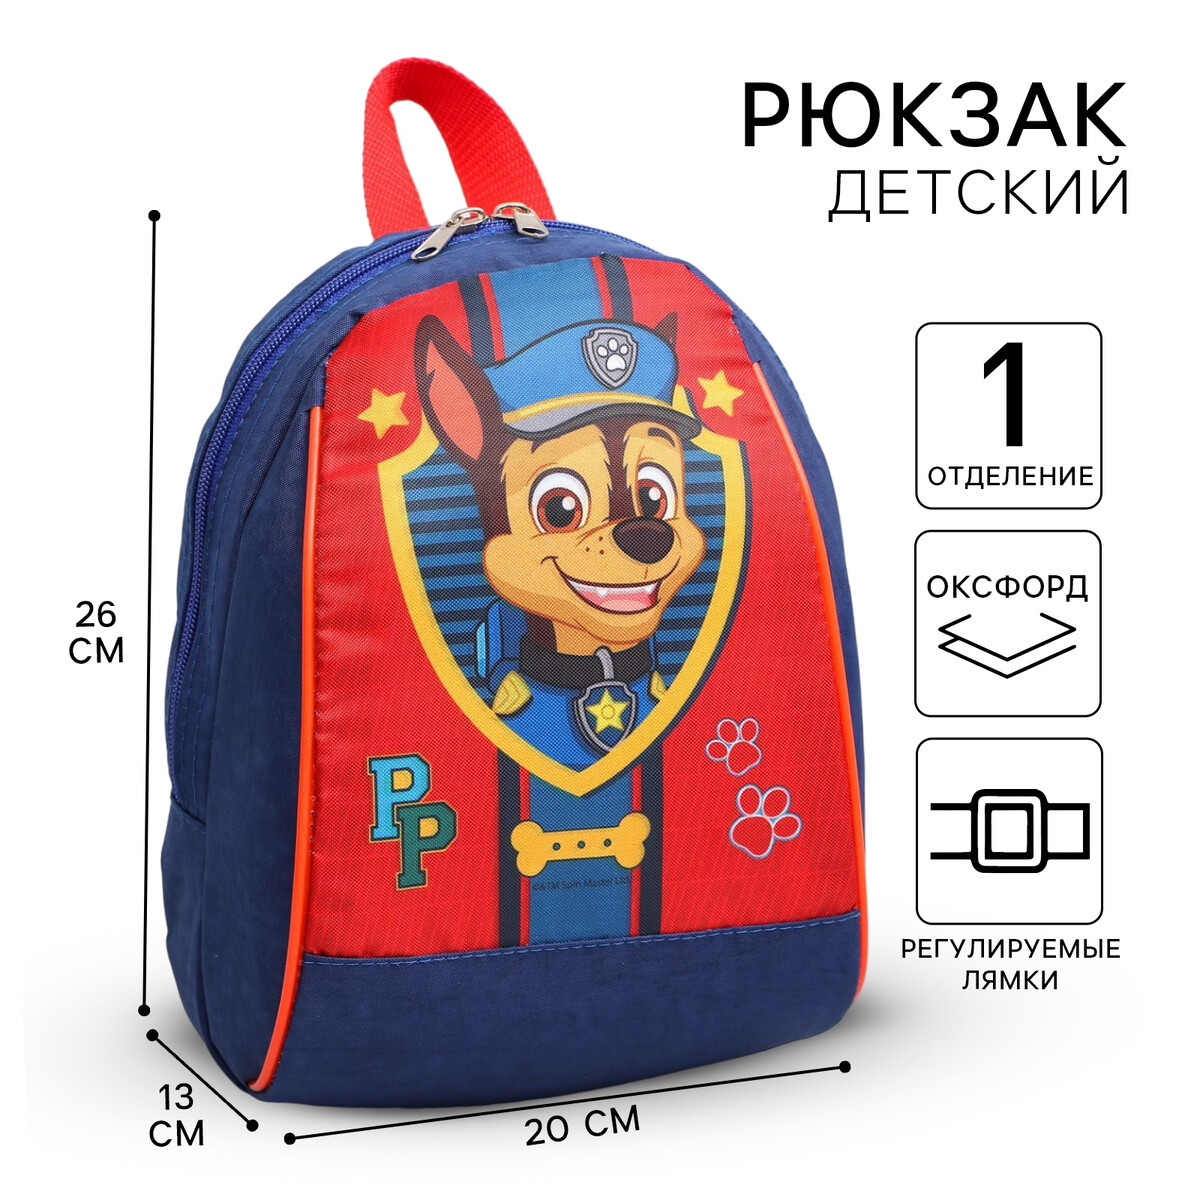 Рюкзак детский, отдел на молнии, 20 см х 13 см х 26 см